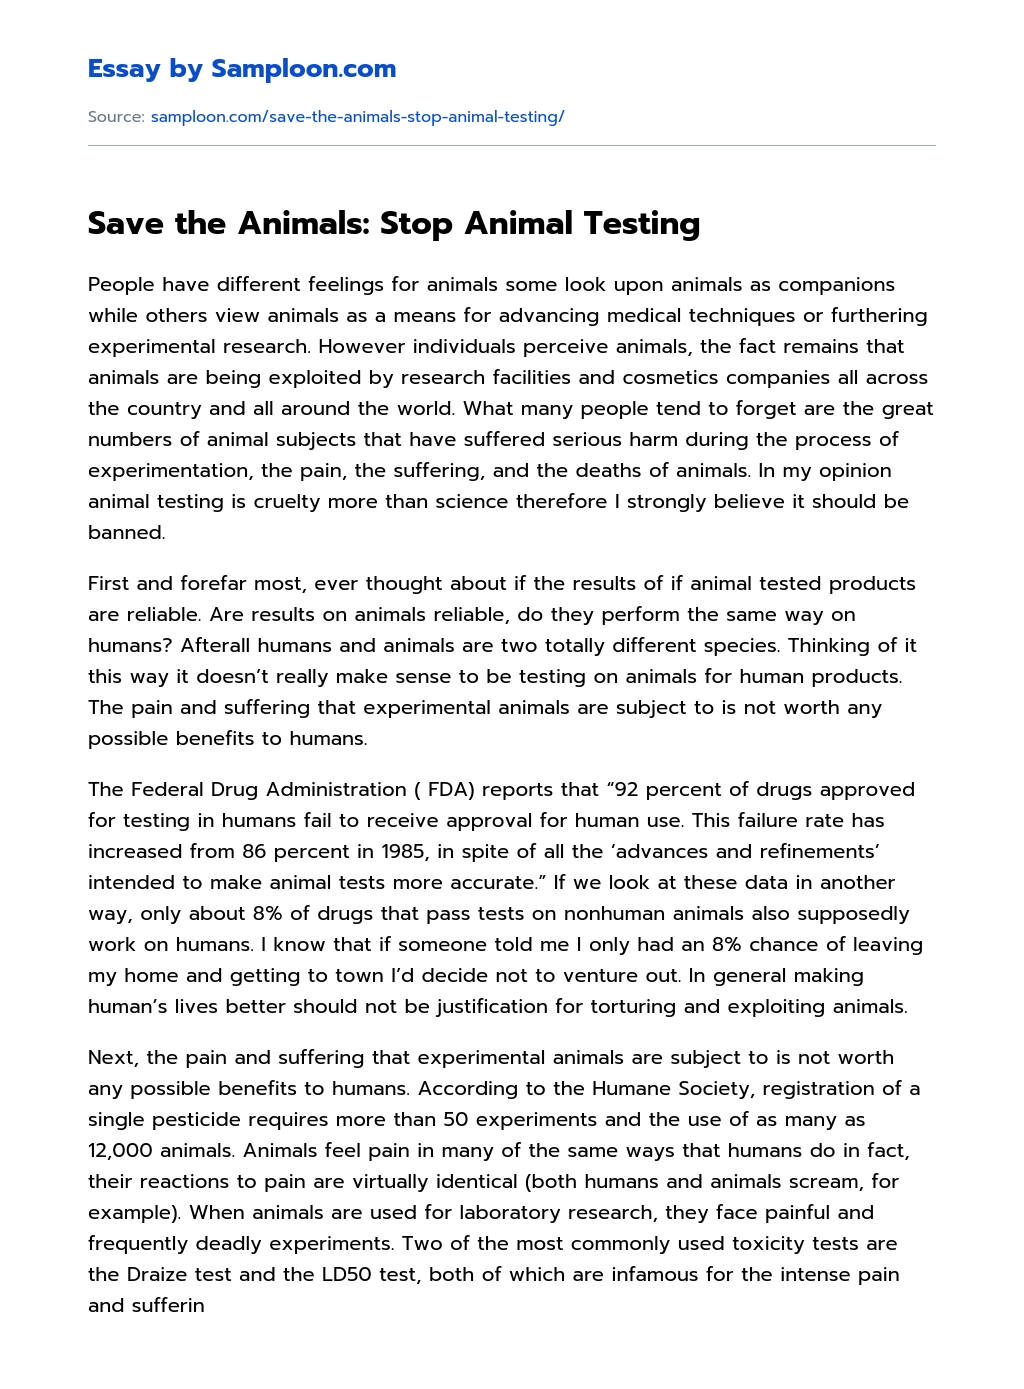 Save the Animals: Stop Animal Testing Argumentative Essay on 